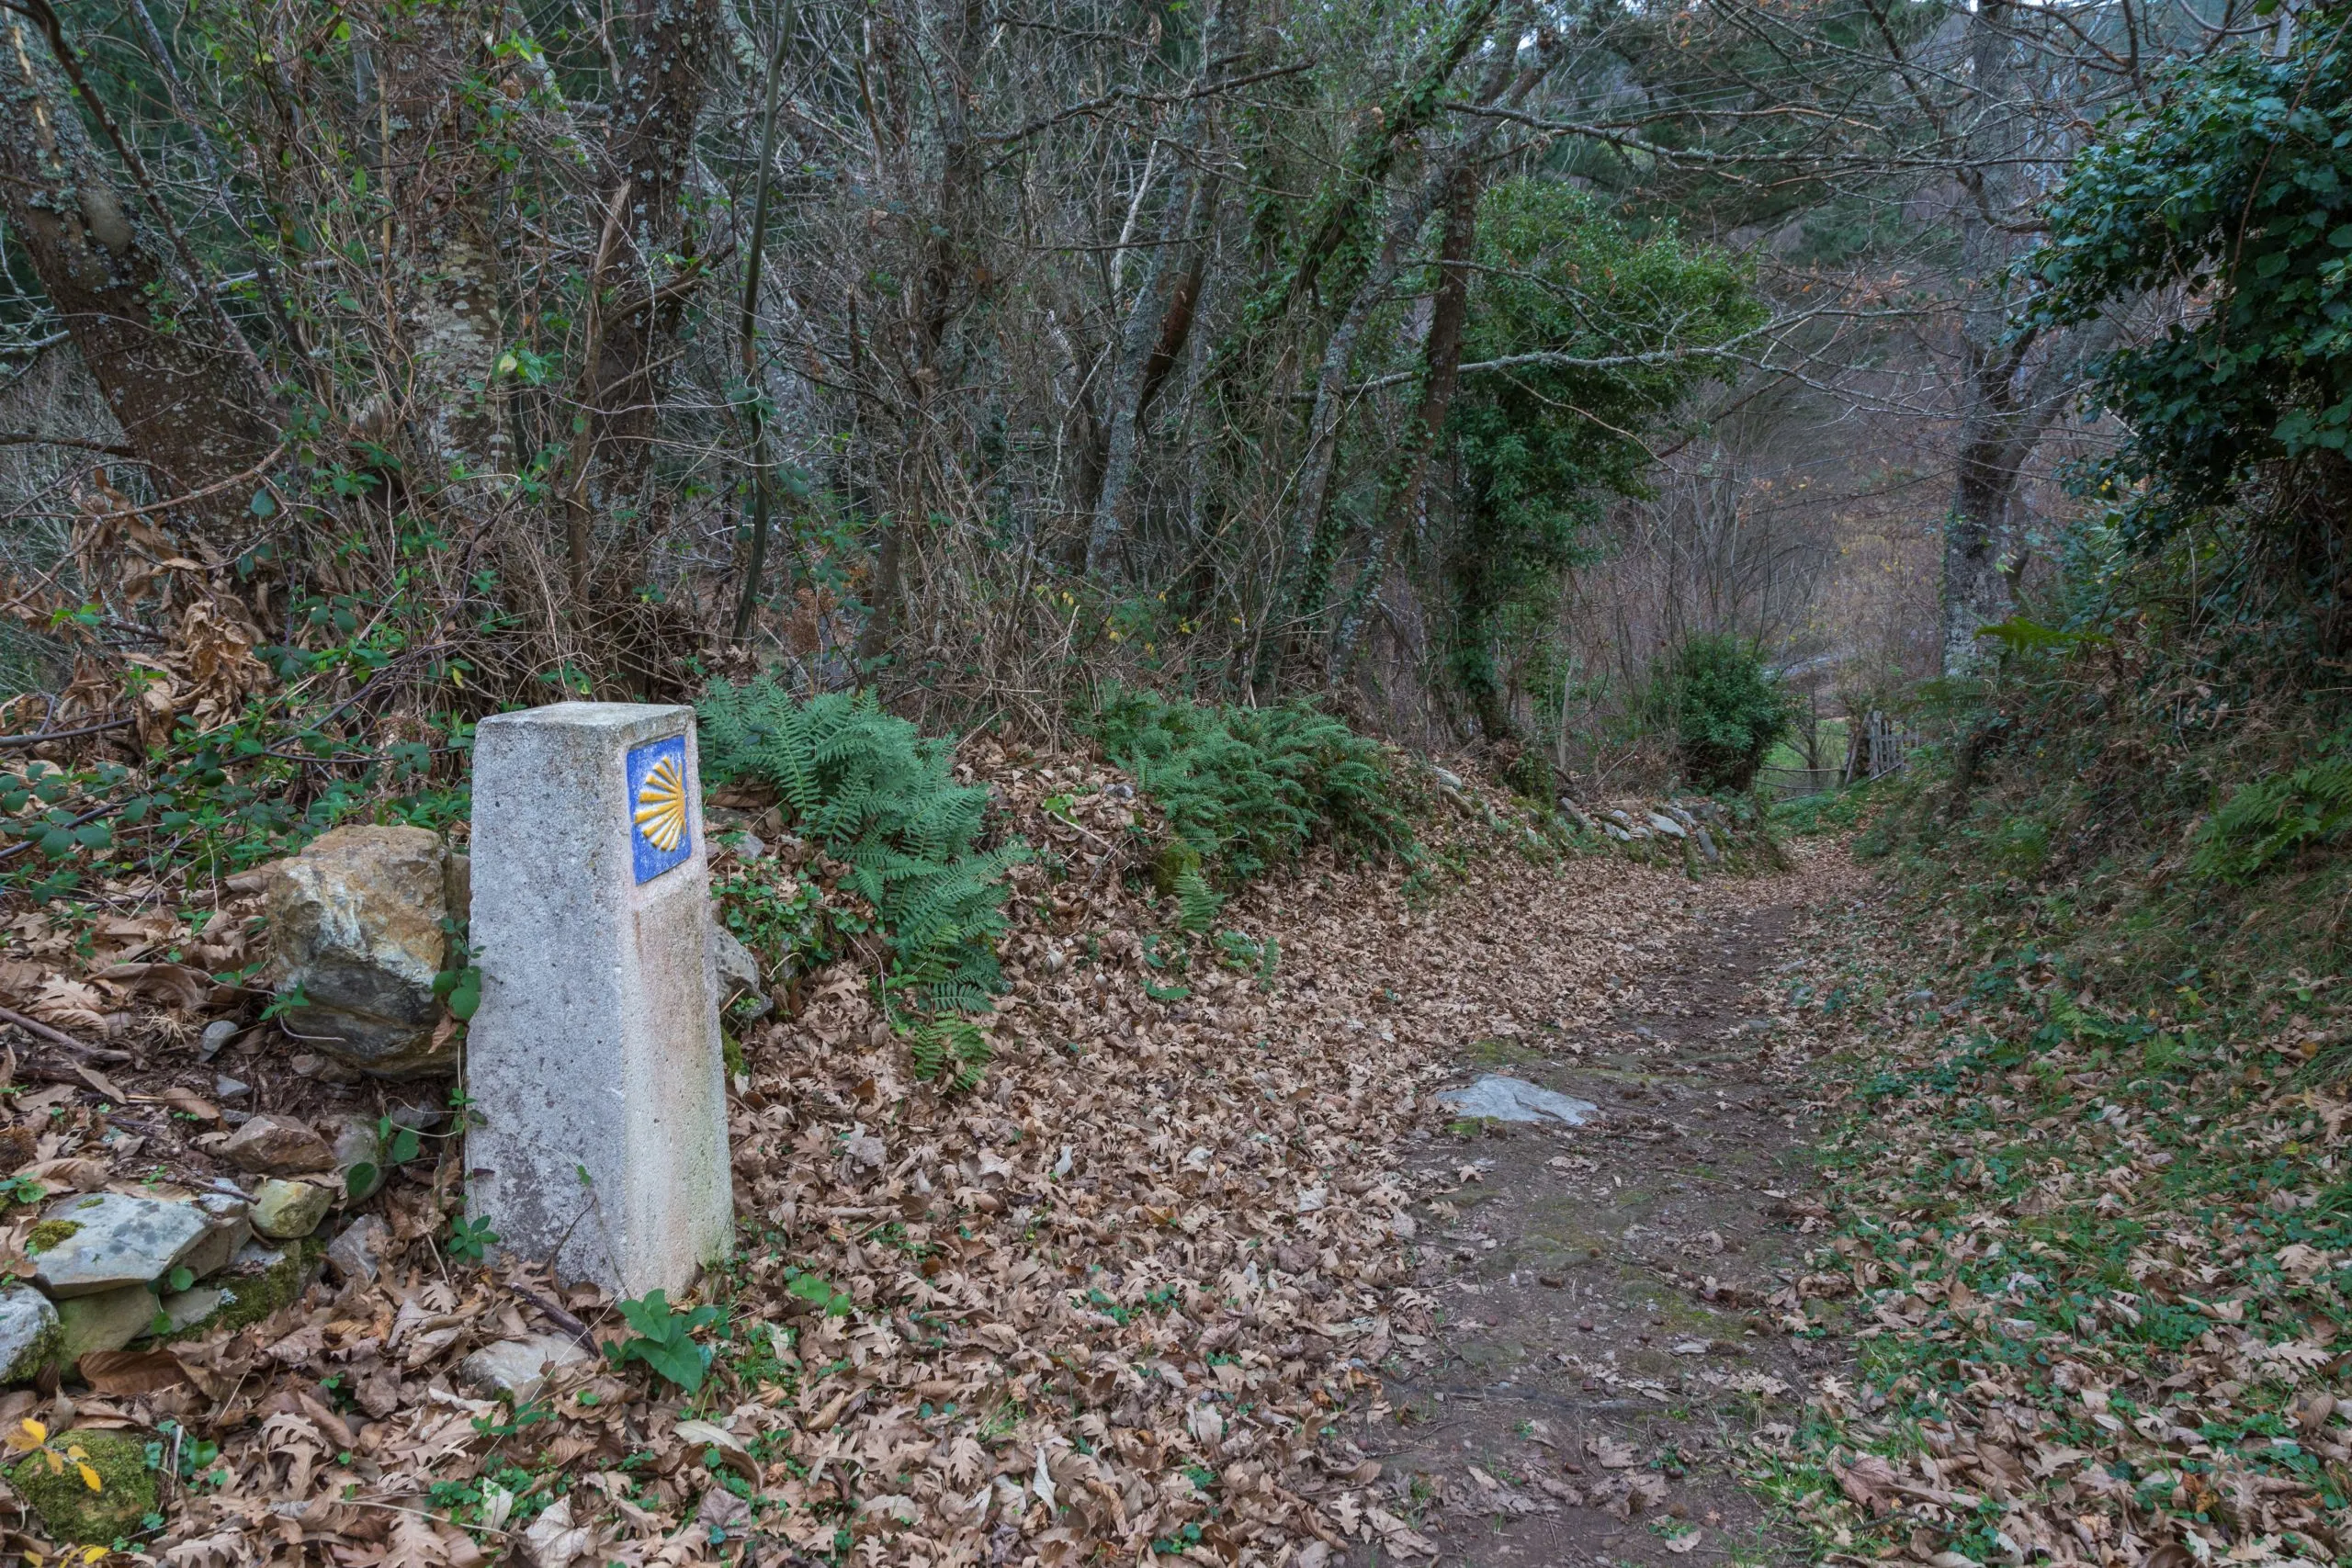 Road sign near Pola de Allende and Ferroy on the Camino Primitivo in Spain